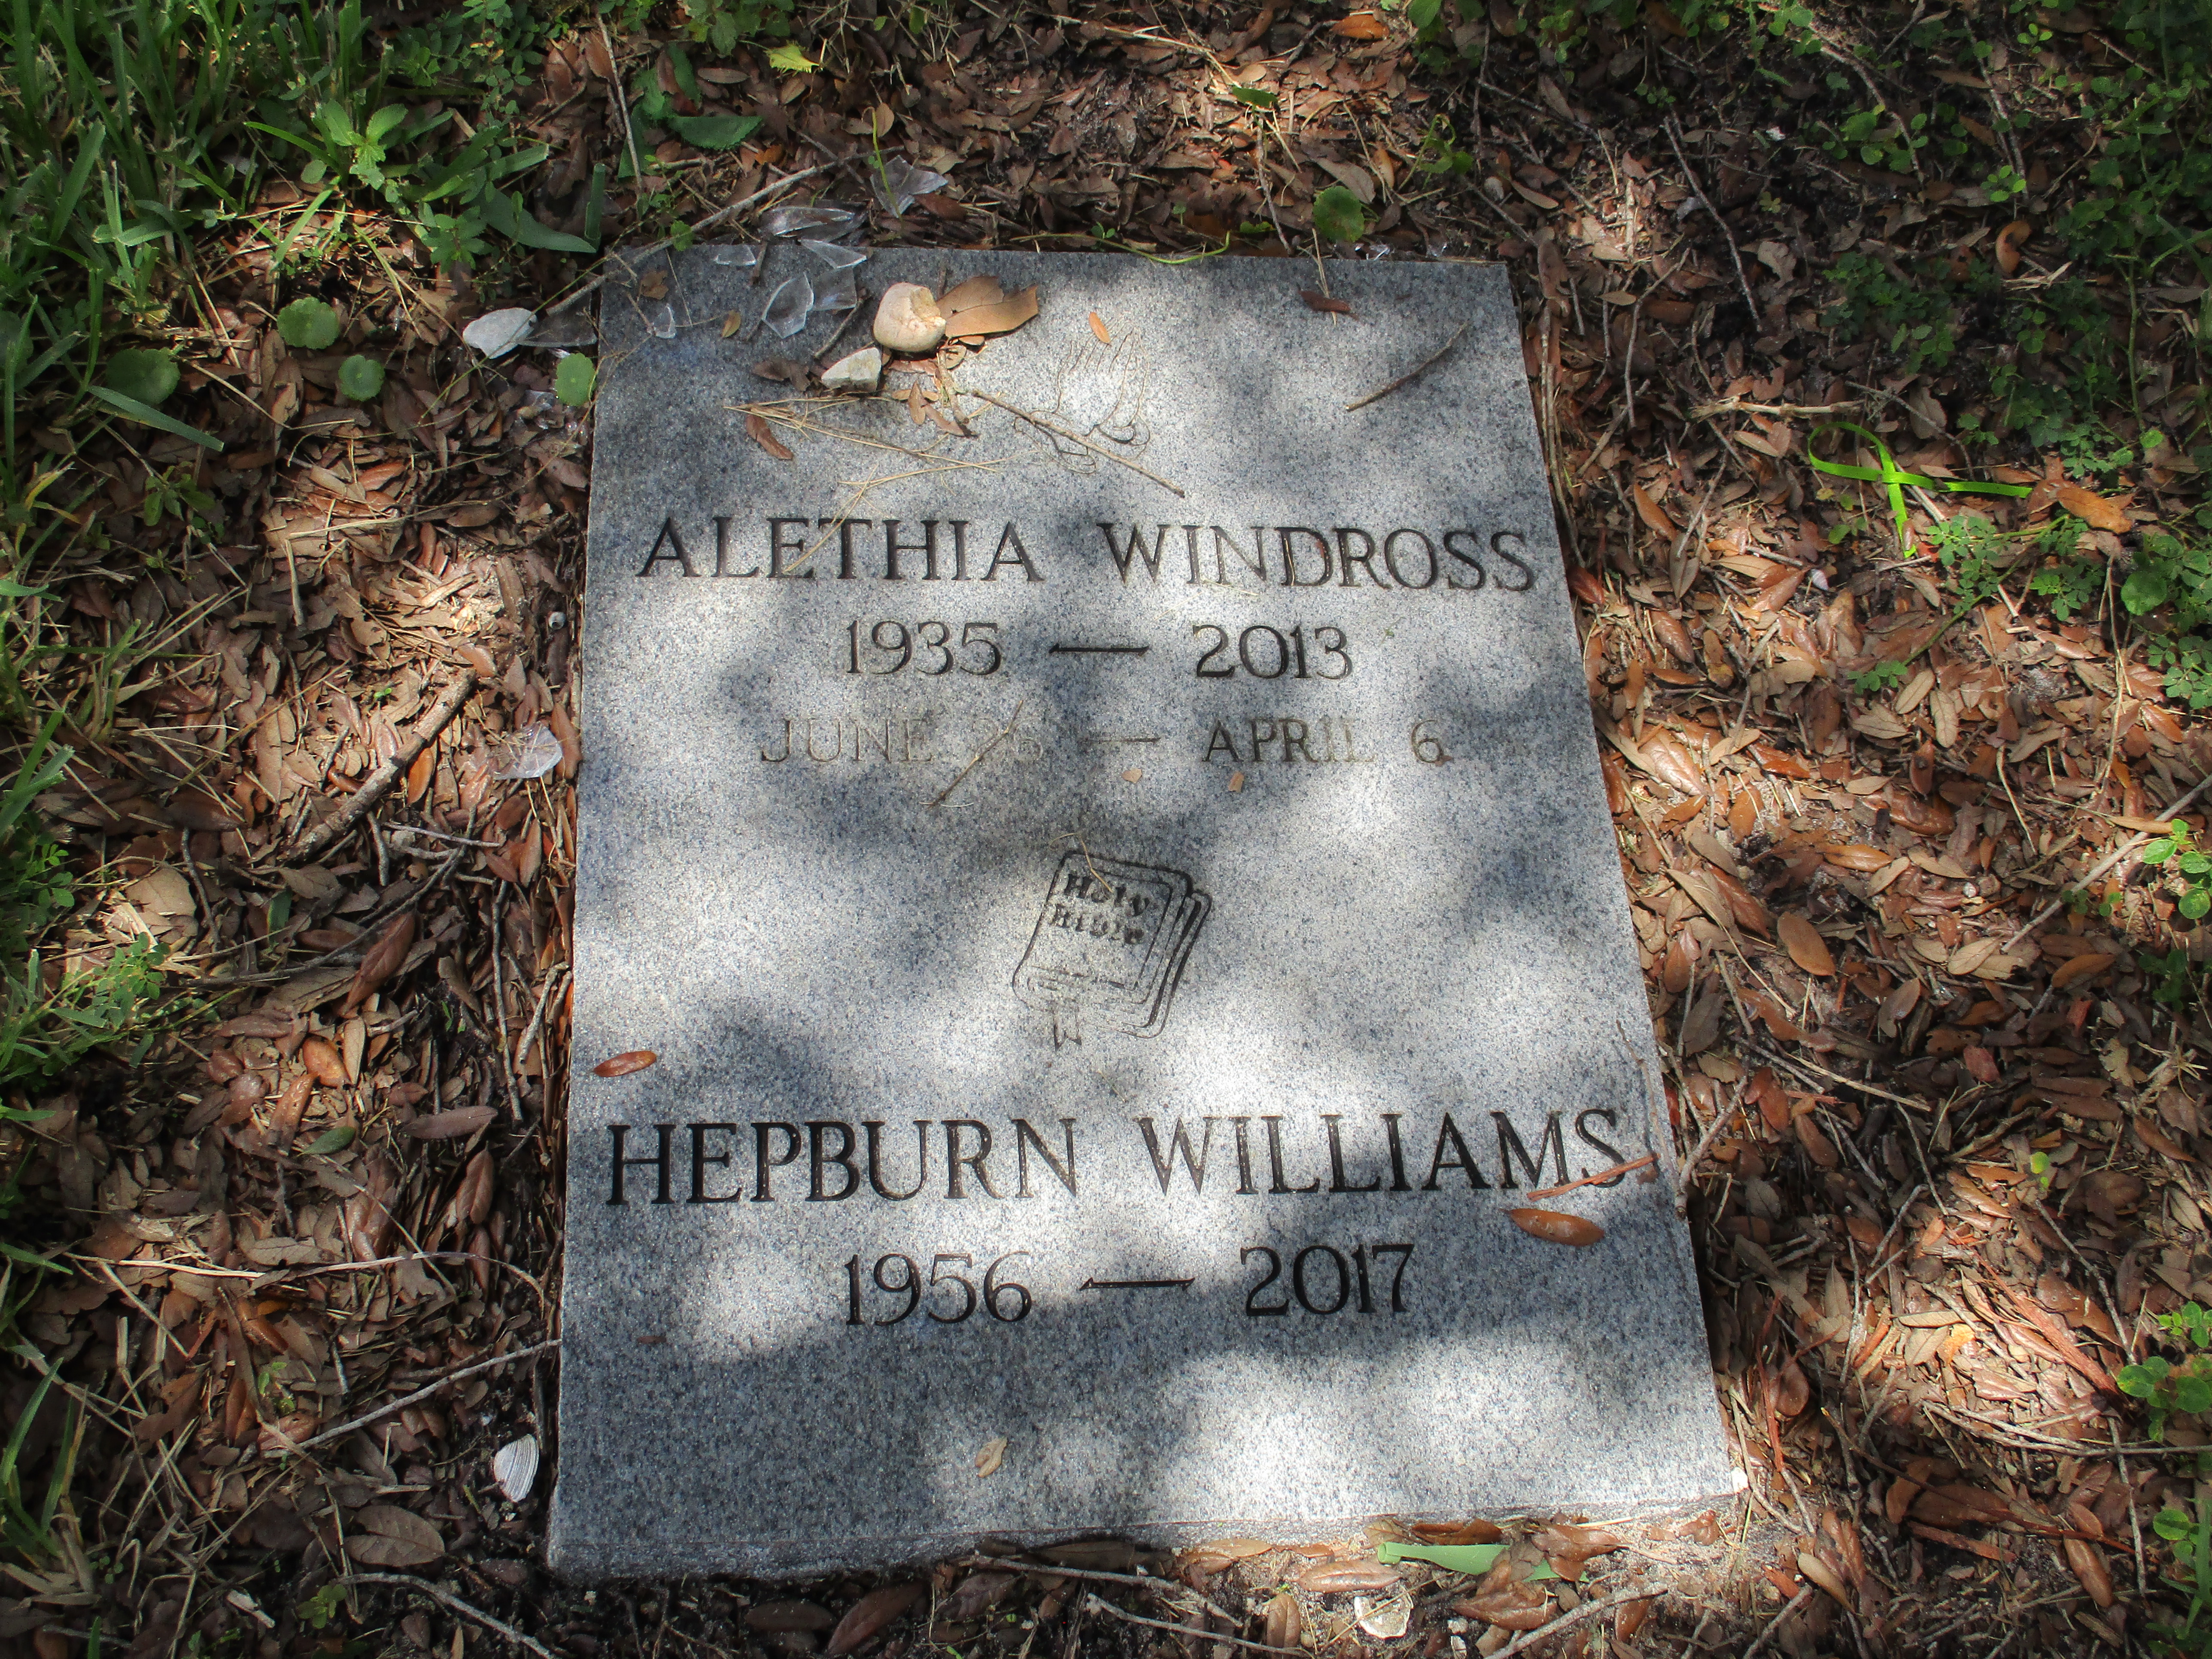 Hepburn Williams